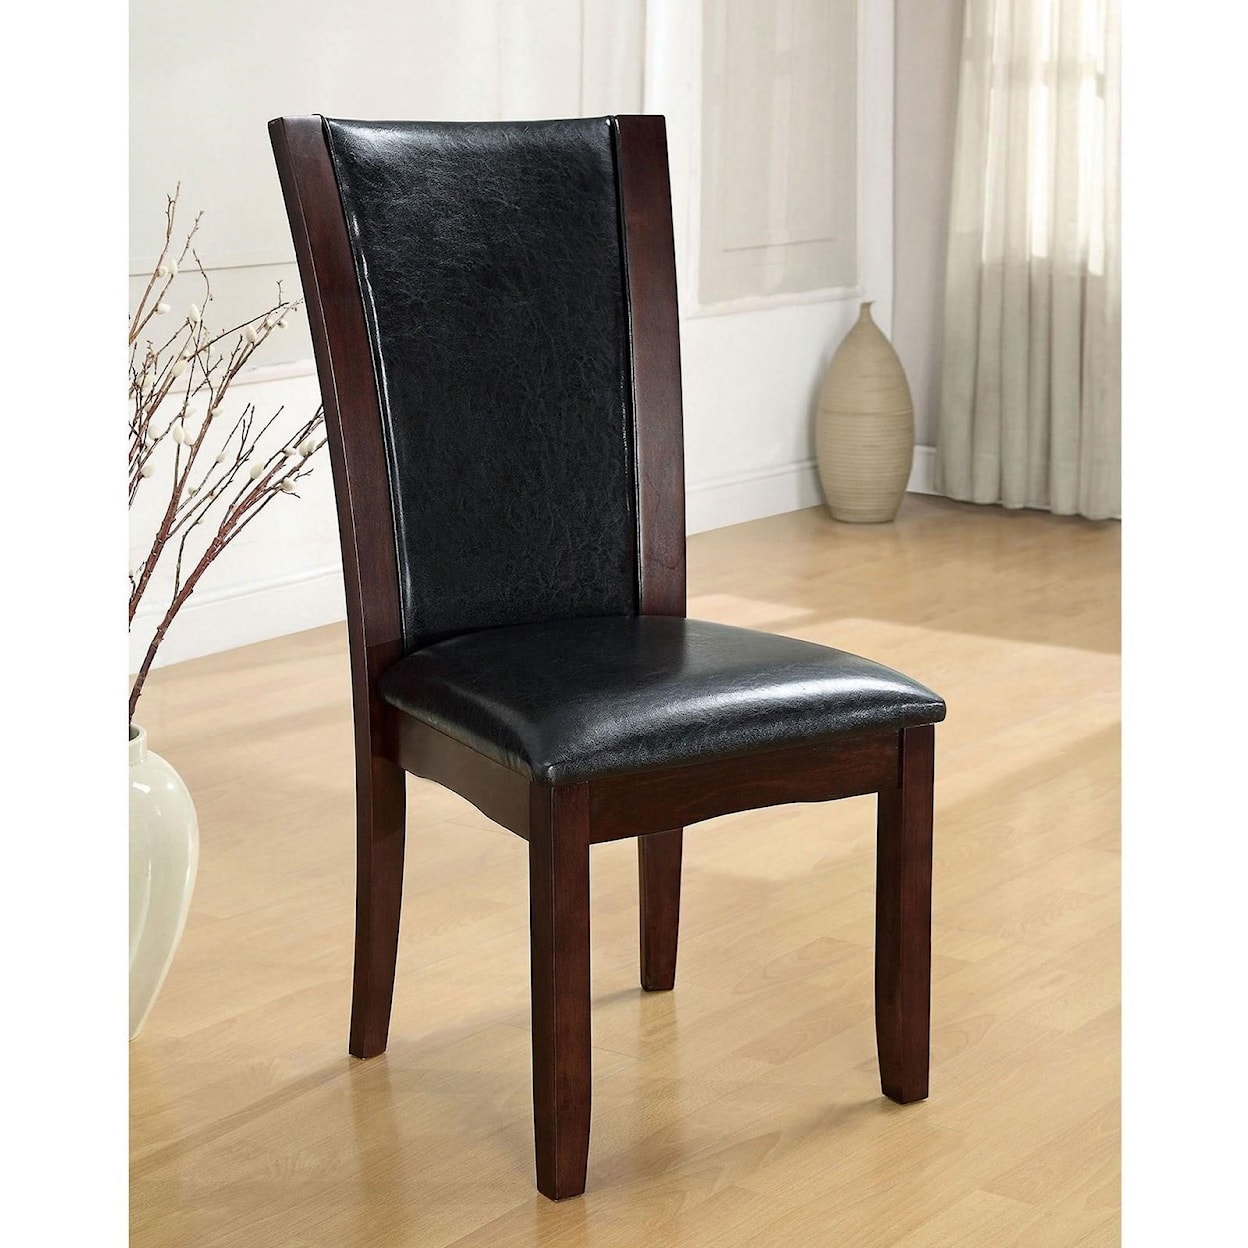 Furniture of America - FOA Manhattan I & II Set of 2 Side Chairs - Espresso Finish